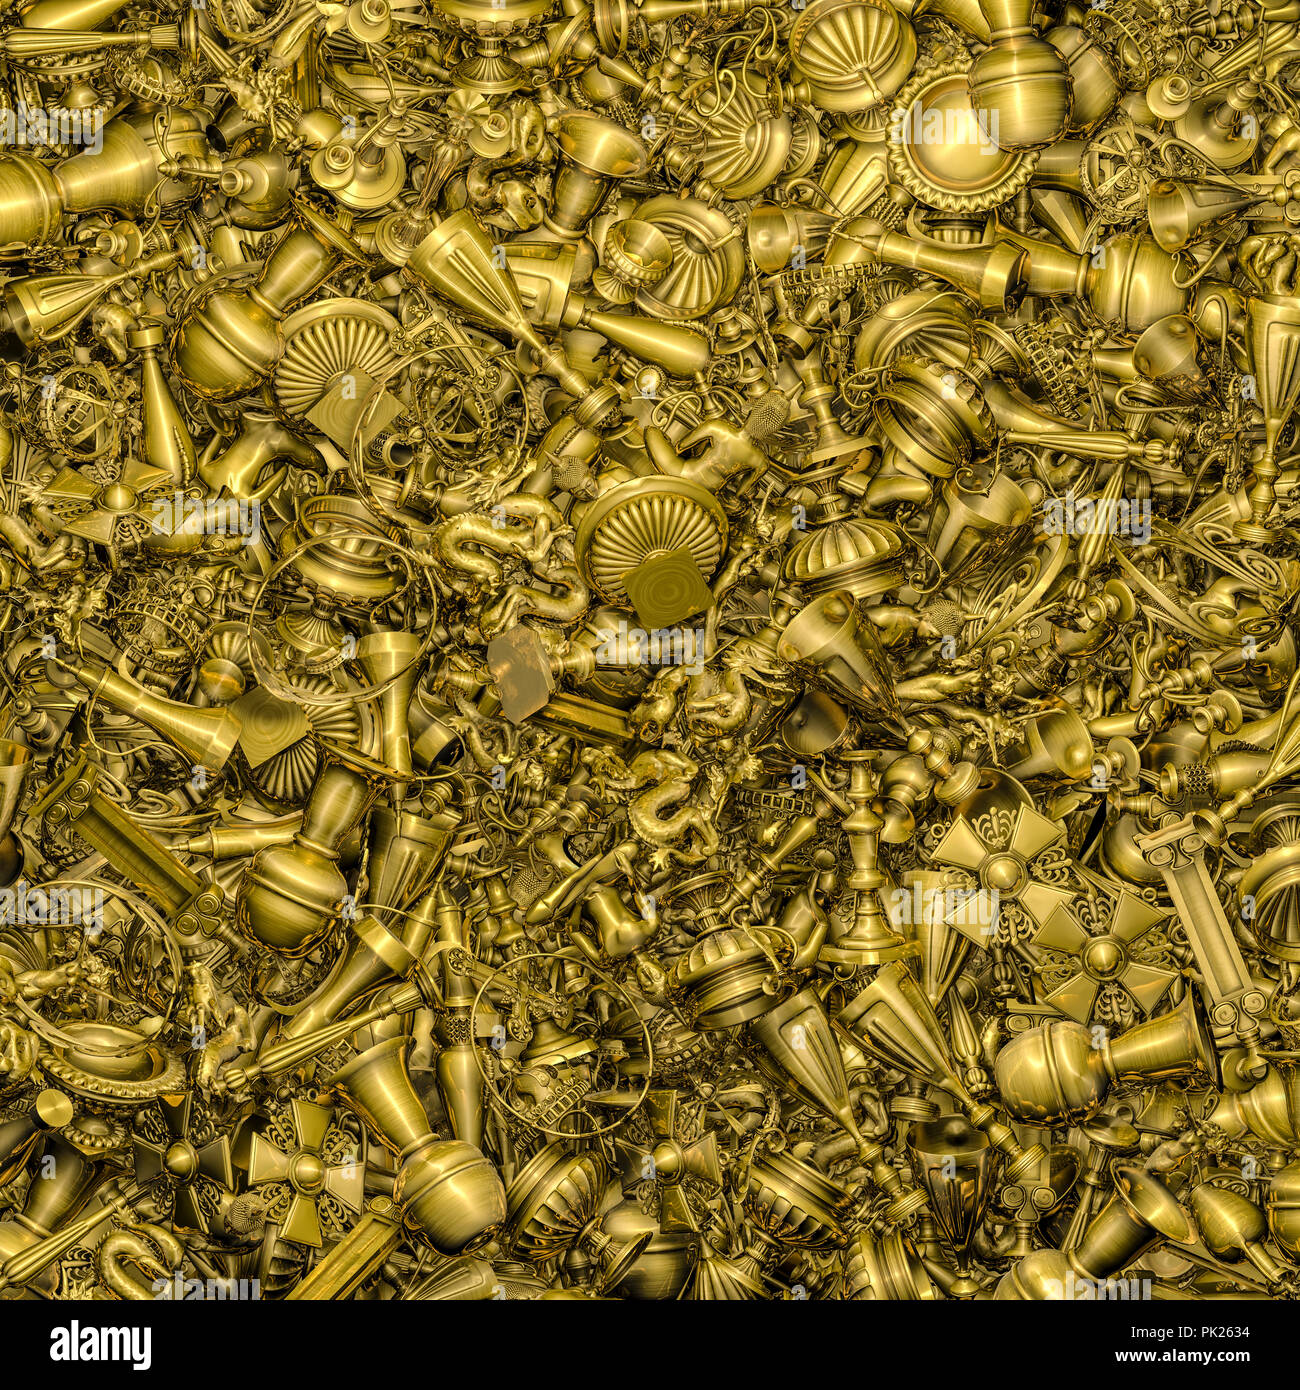 Gold treasure background / 3D illustration of golden treasure trove Stock Photo